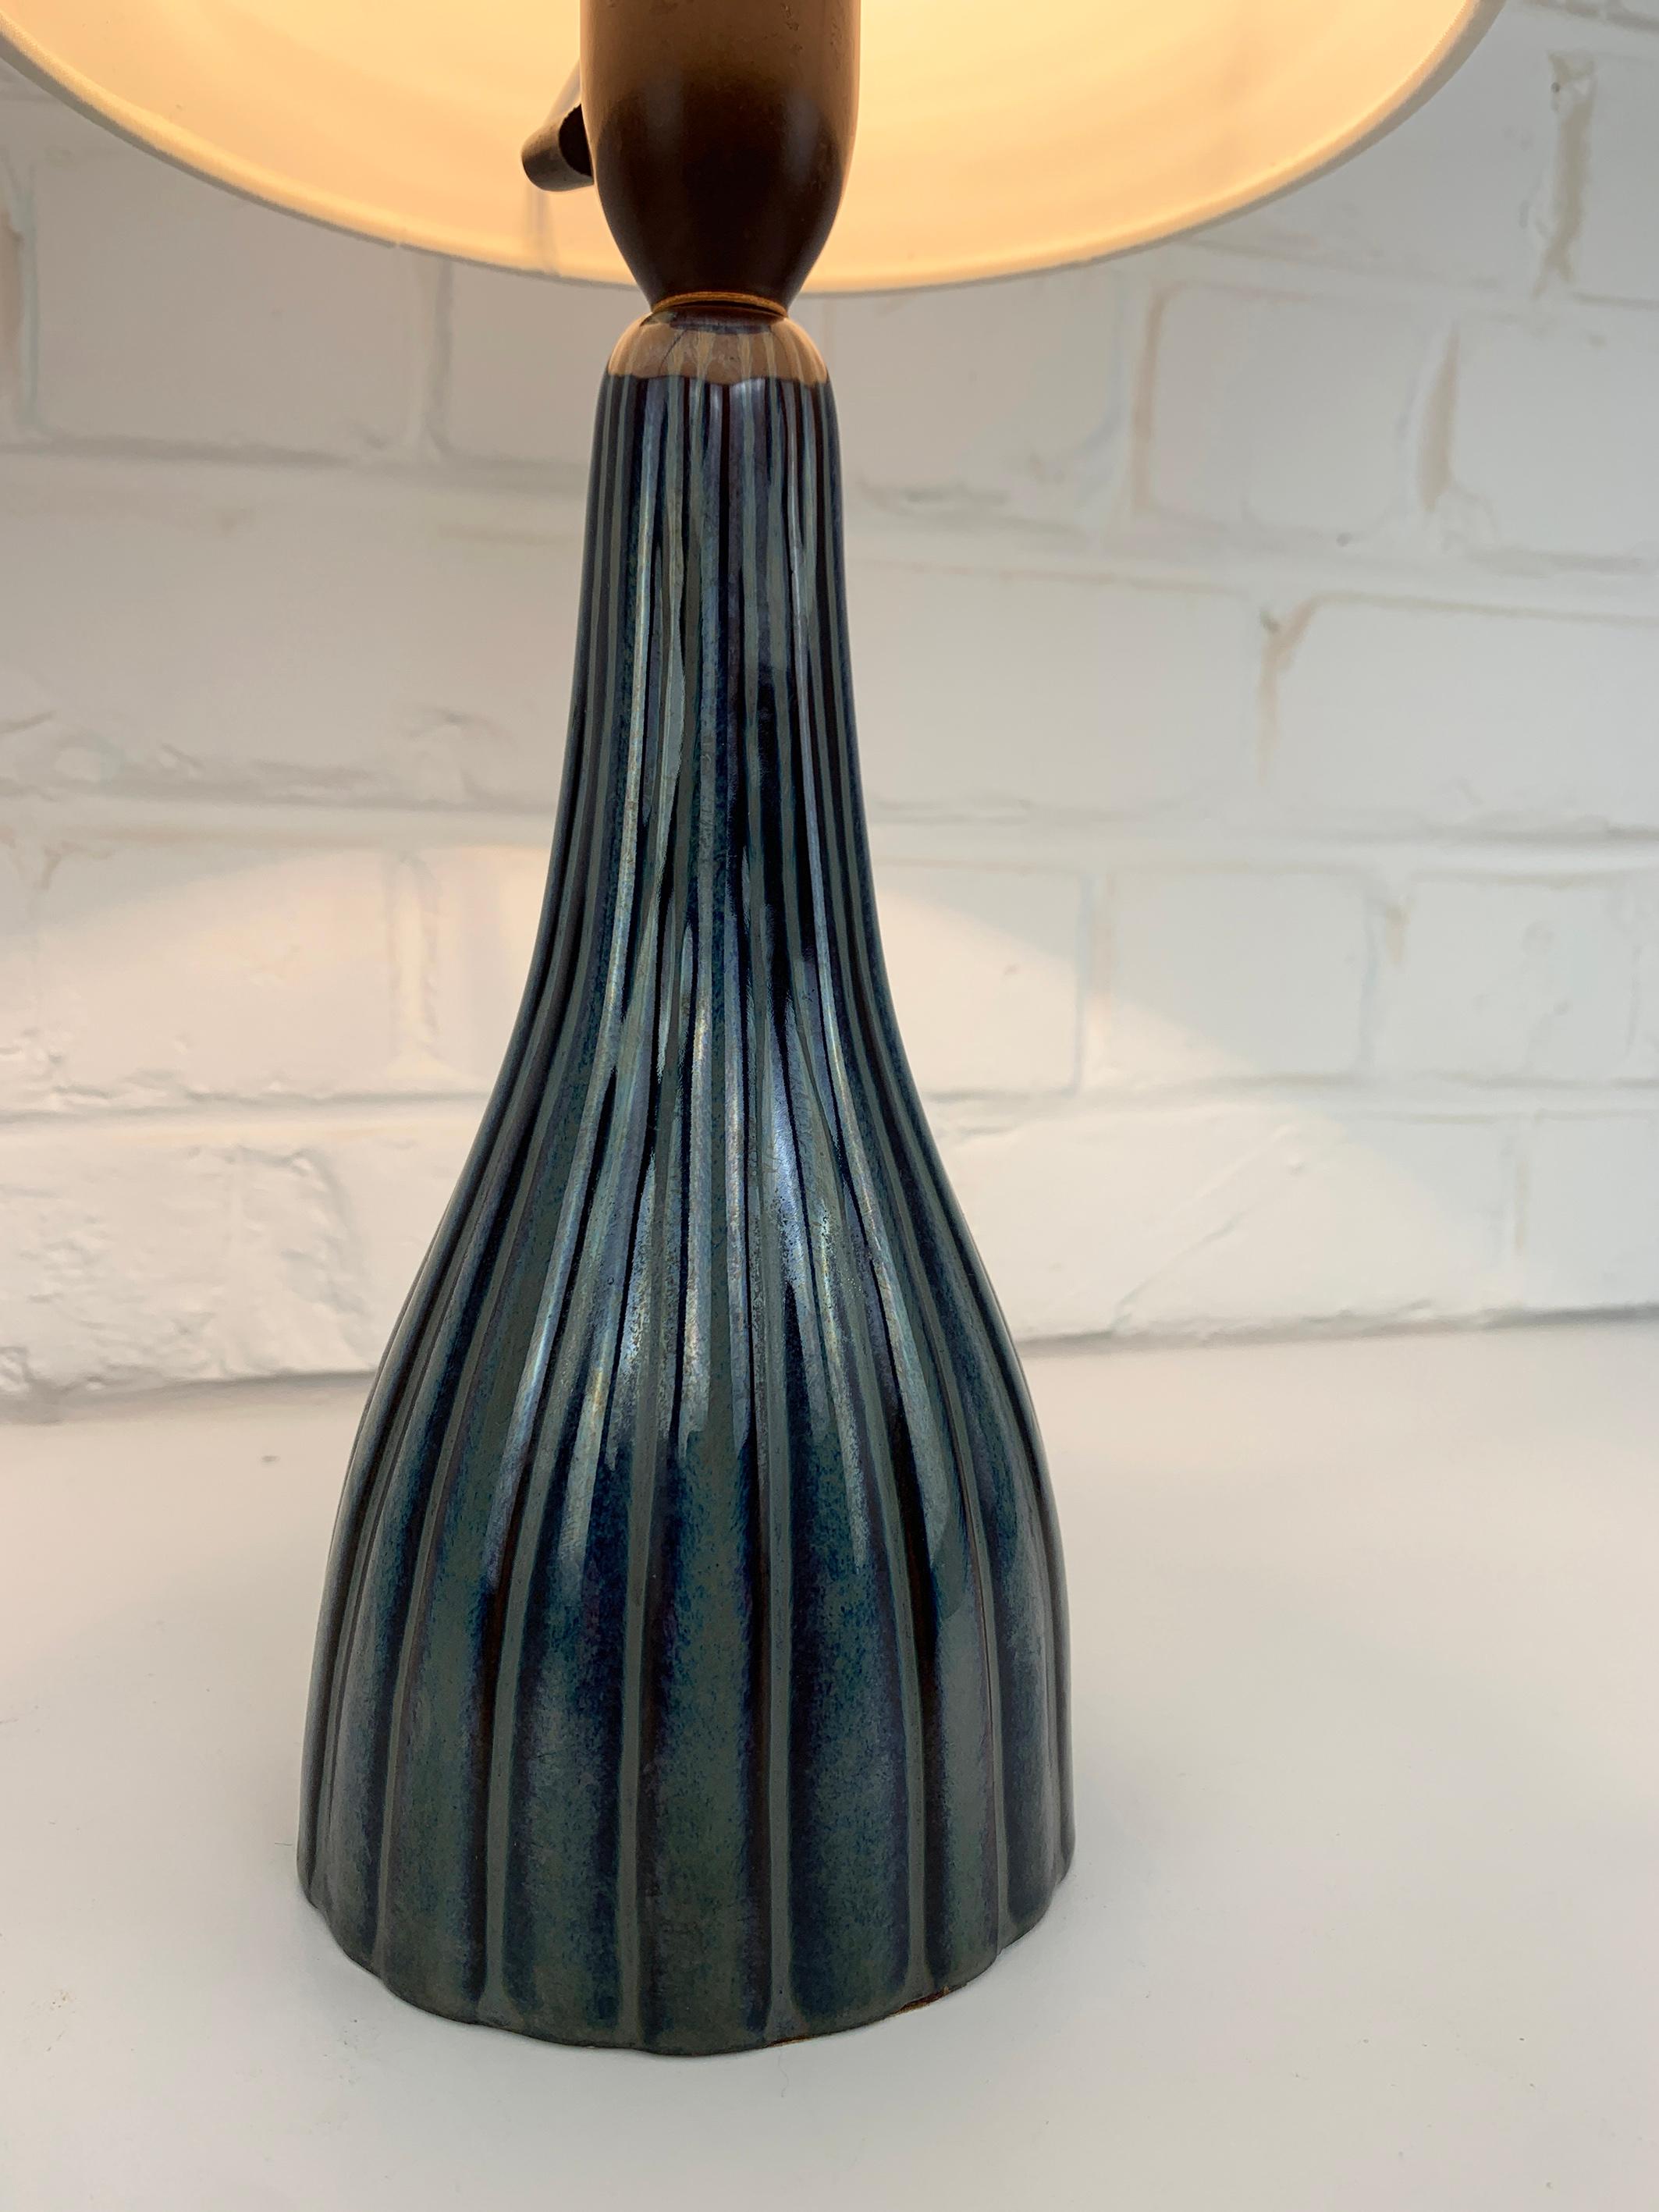 Danish Søholm Stentøj ceramic table lamp blue stripe pattern Mid-Century Modern For Sale 2